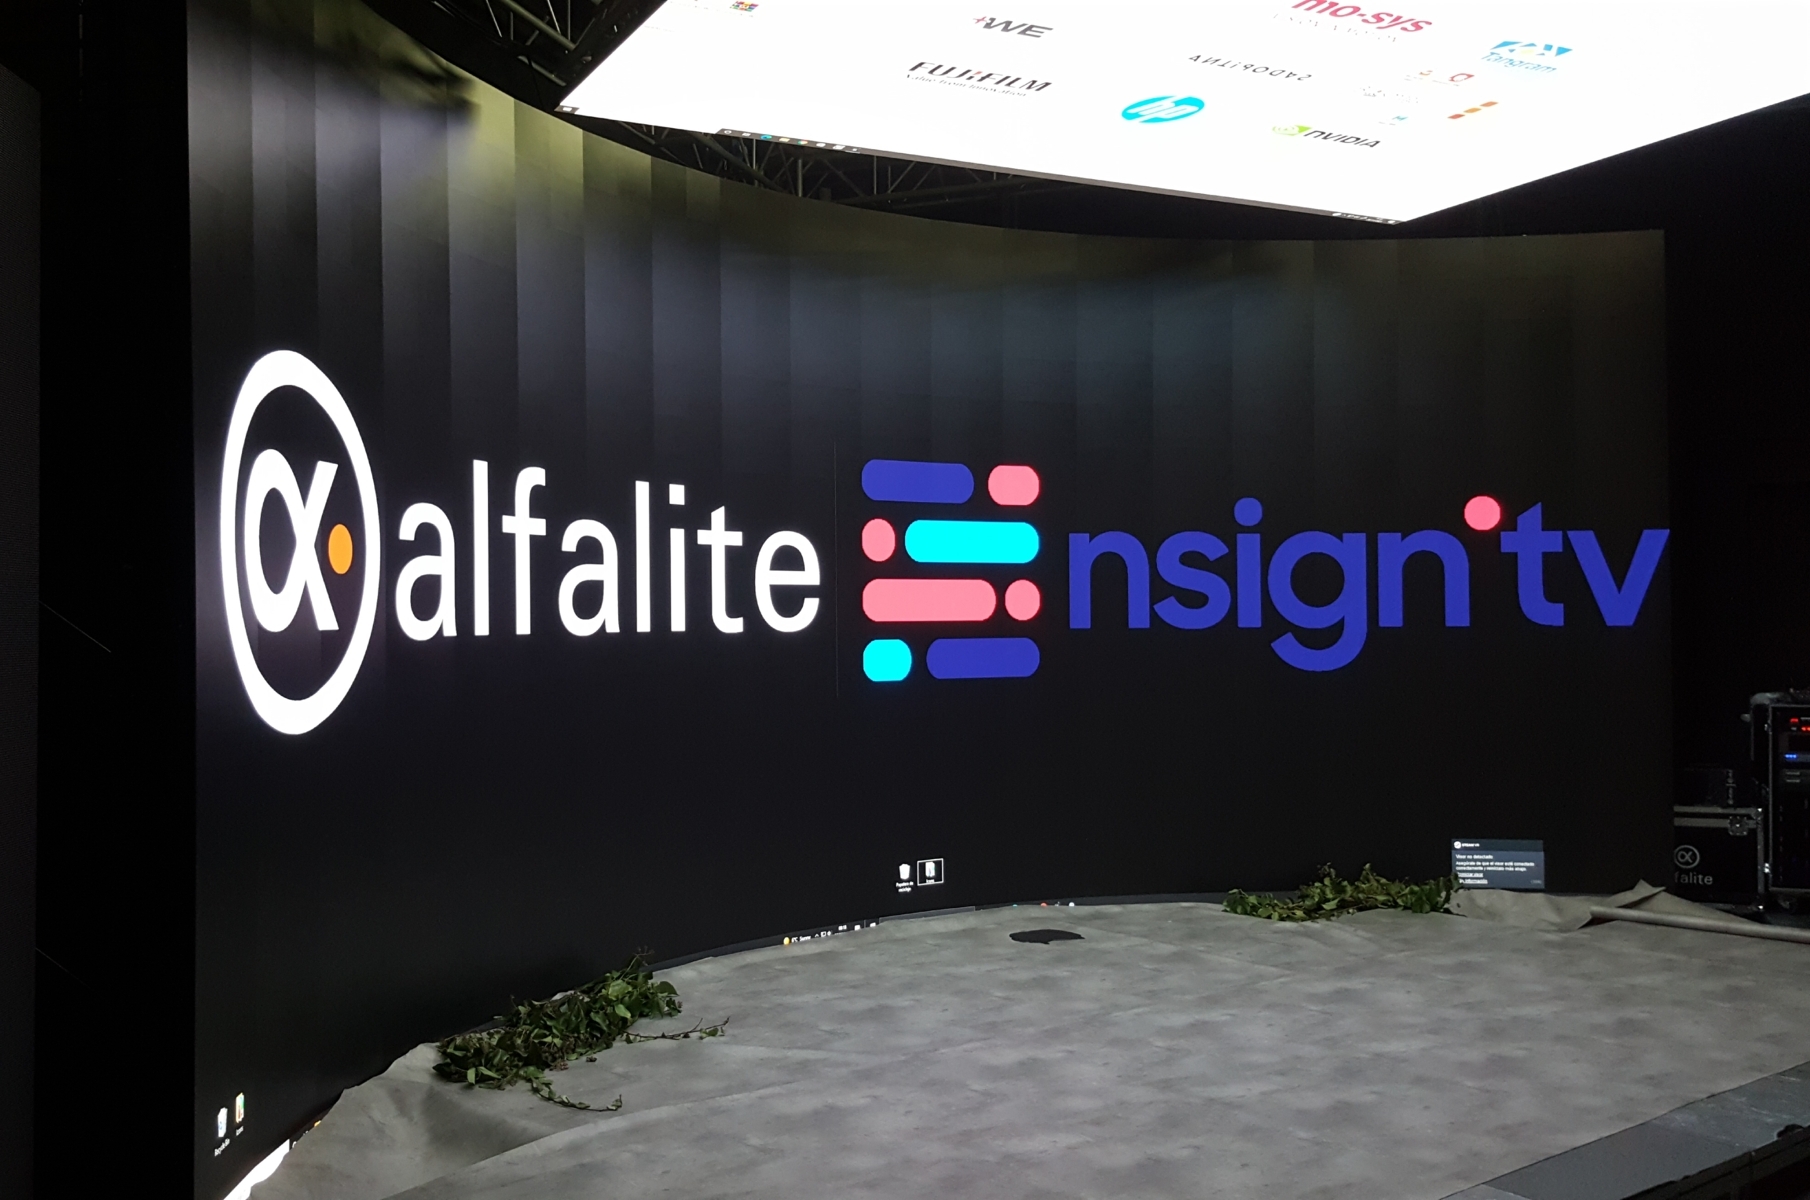 nsign.tv Integrates Digital Signage Platform Into Alfalite’s LED Screens